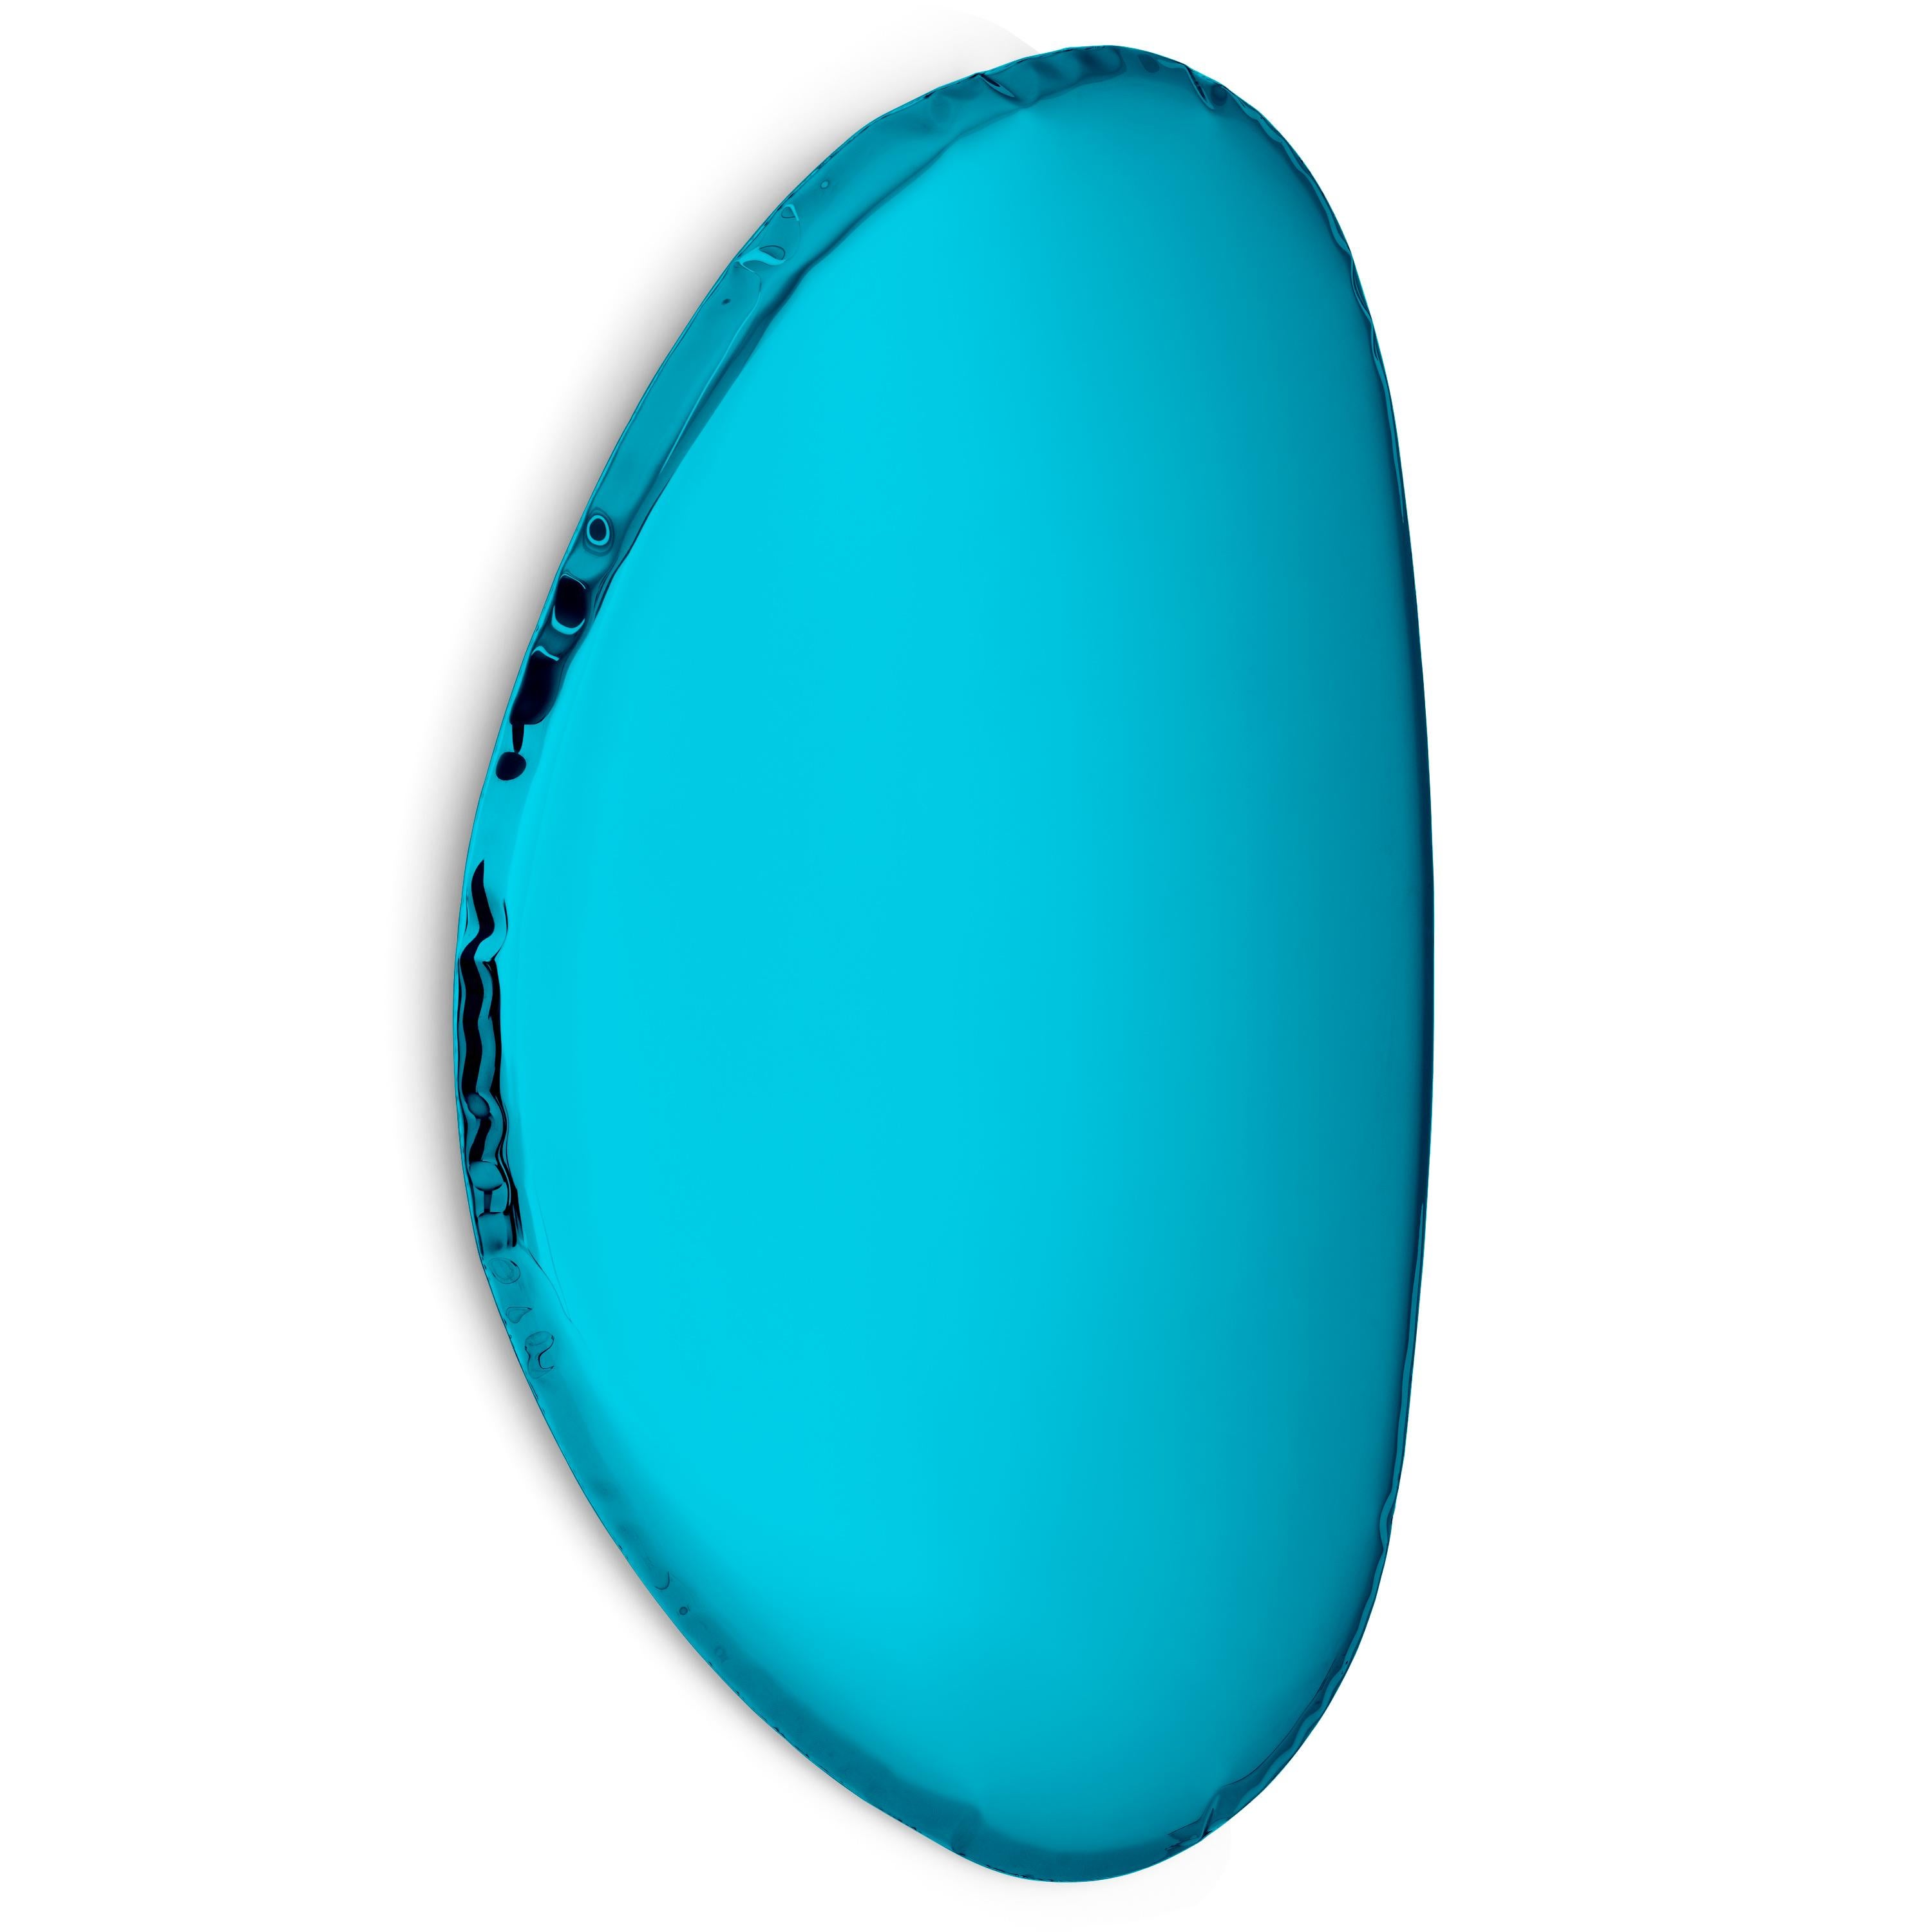 Sapphire Tafla O2 wall mirror by Zieta
Dimensions: D 6 x W 97 x H 150 cm 
Material: Stainless steel.
Finish: Sapphire.
Available finishes: Stainless Steel, White Matt, Sapphire/Emerald, Sapphire, Emerald, Deep space blue, Dark matter, or red Rubin.